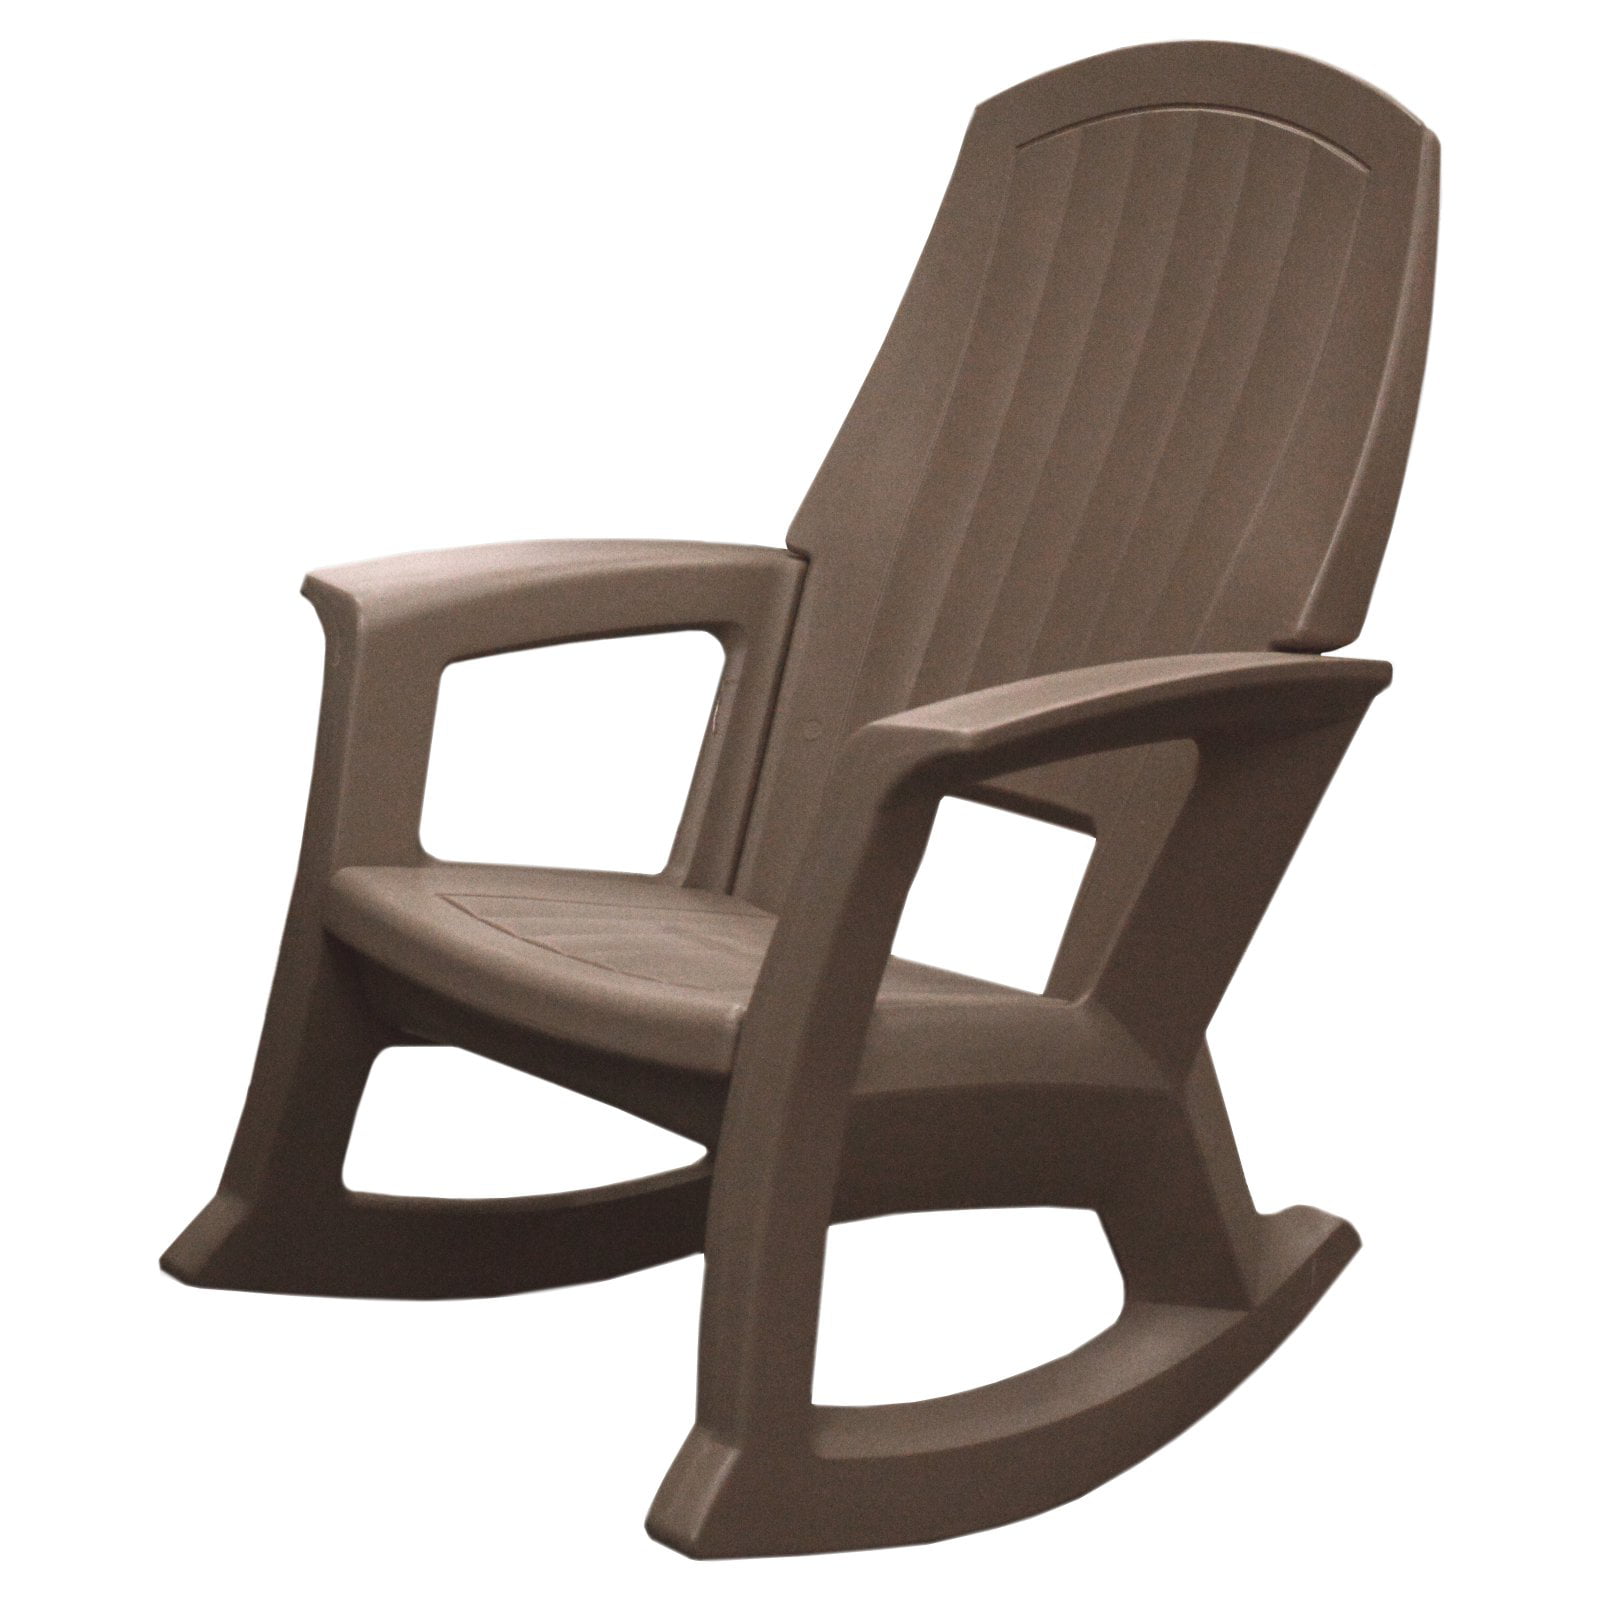 Semco Recycled Plastic Rocking Chair - Walmart.com